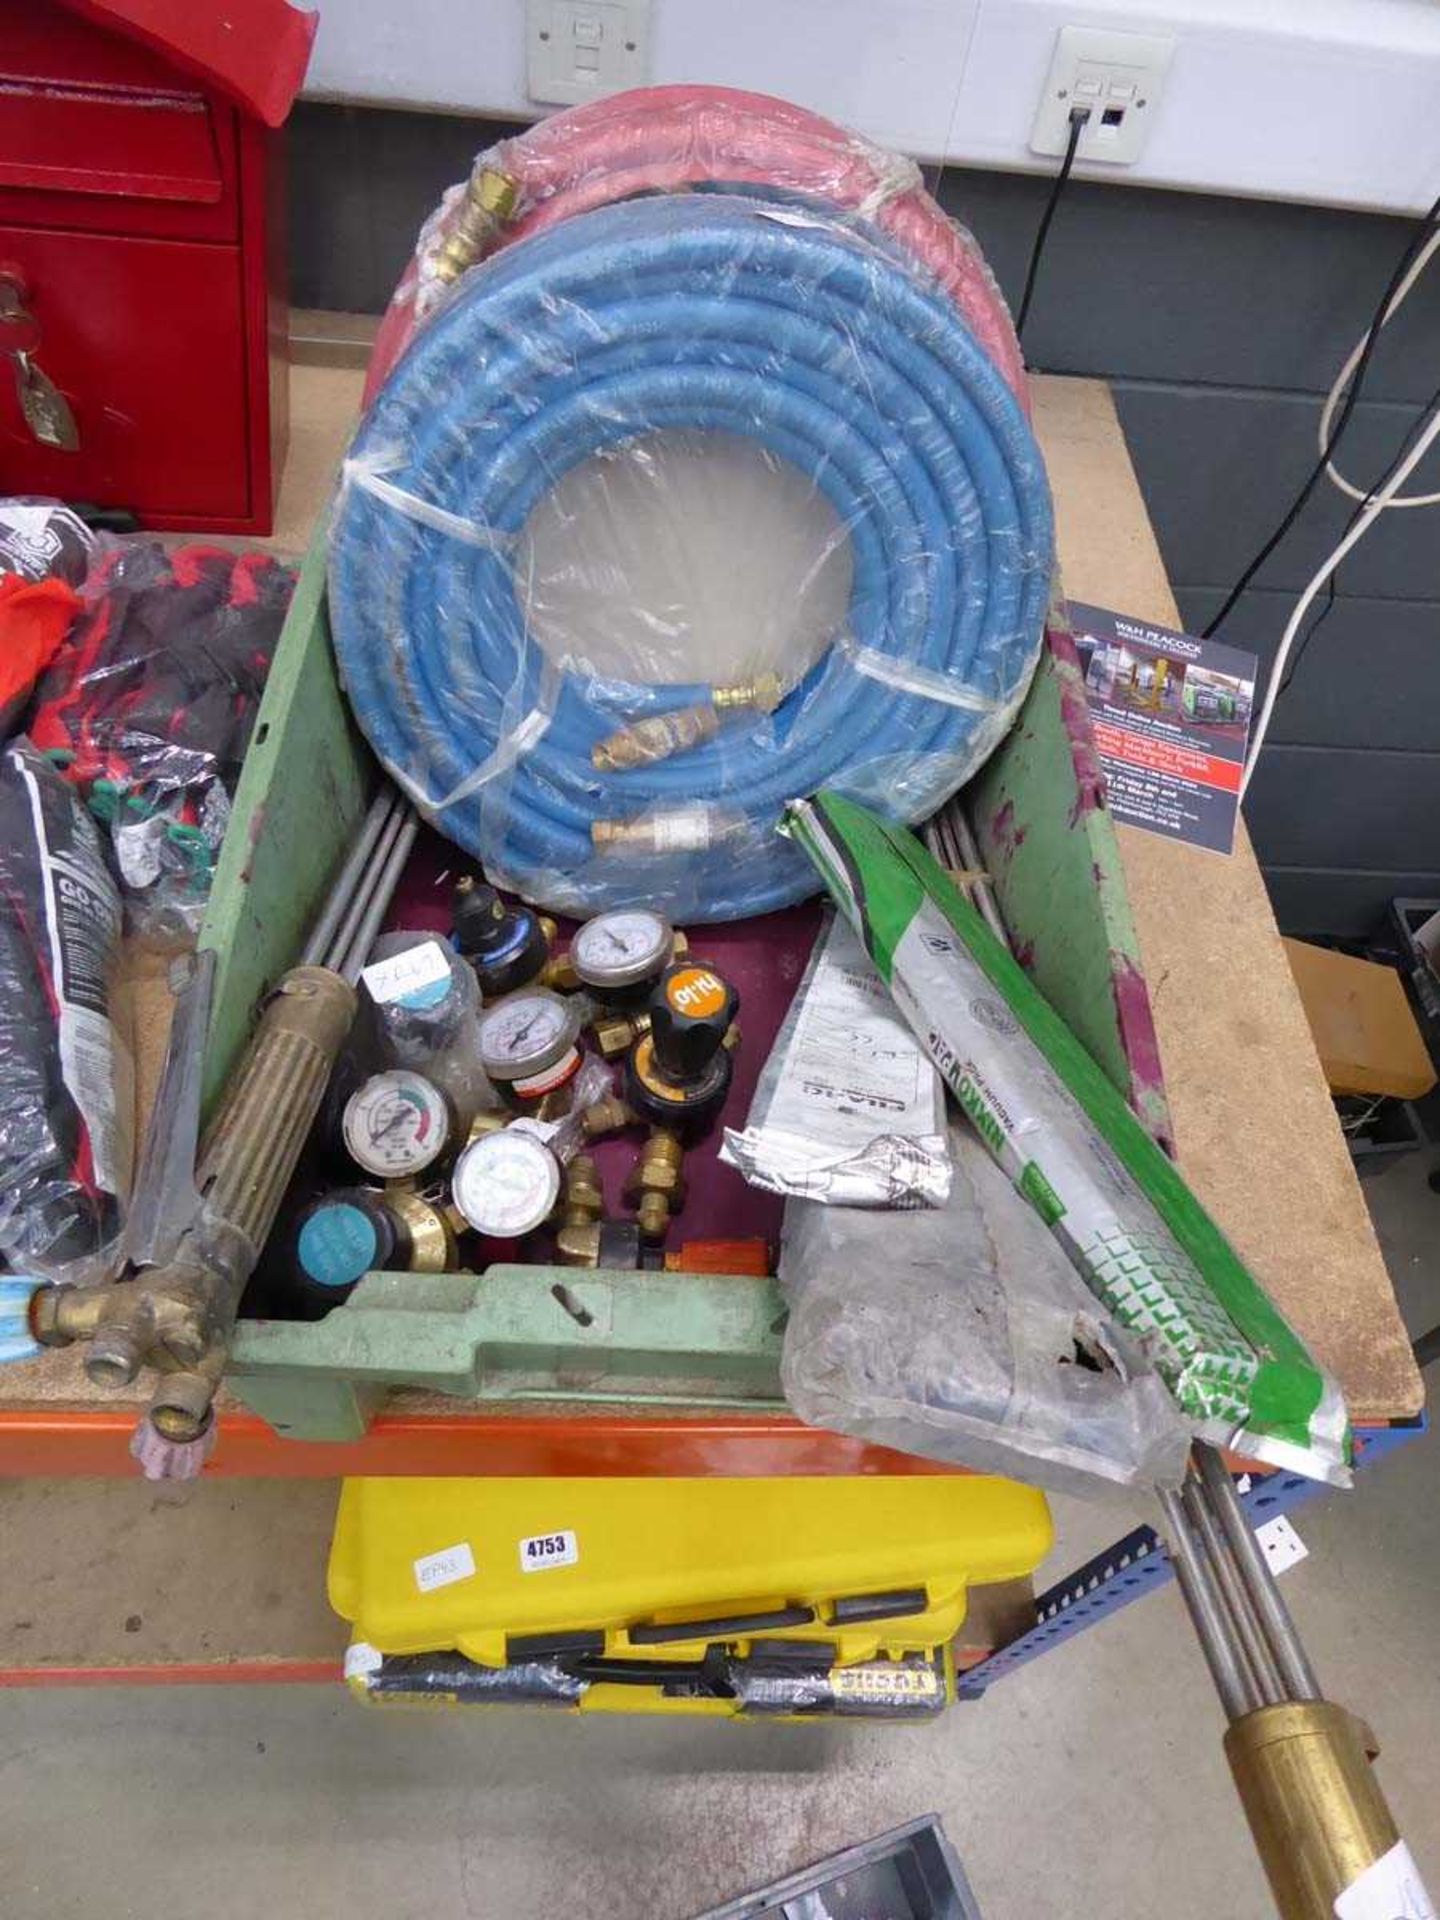 Box containing welding torches, regulators, hoses, welding rods, etc